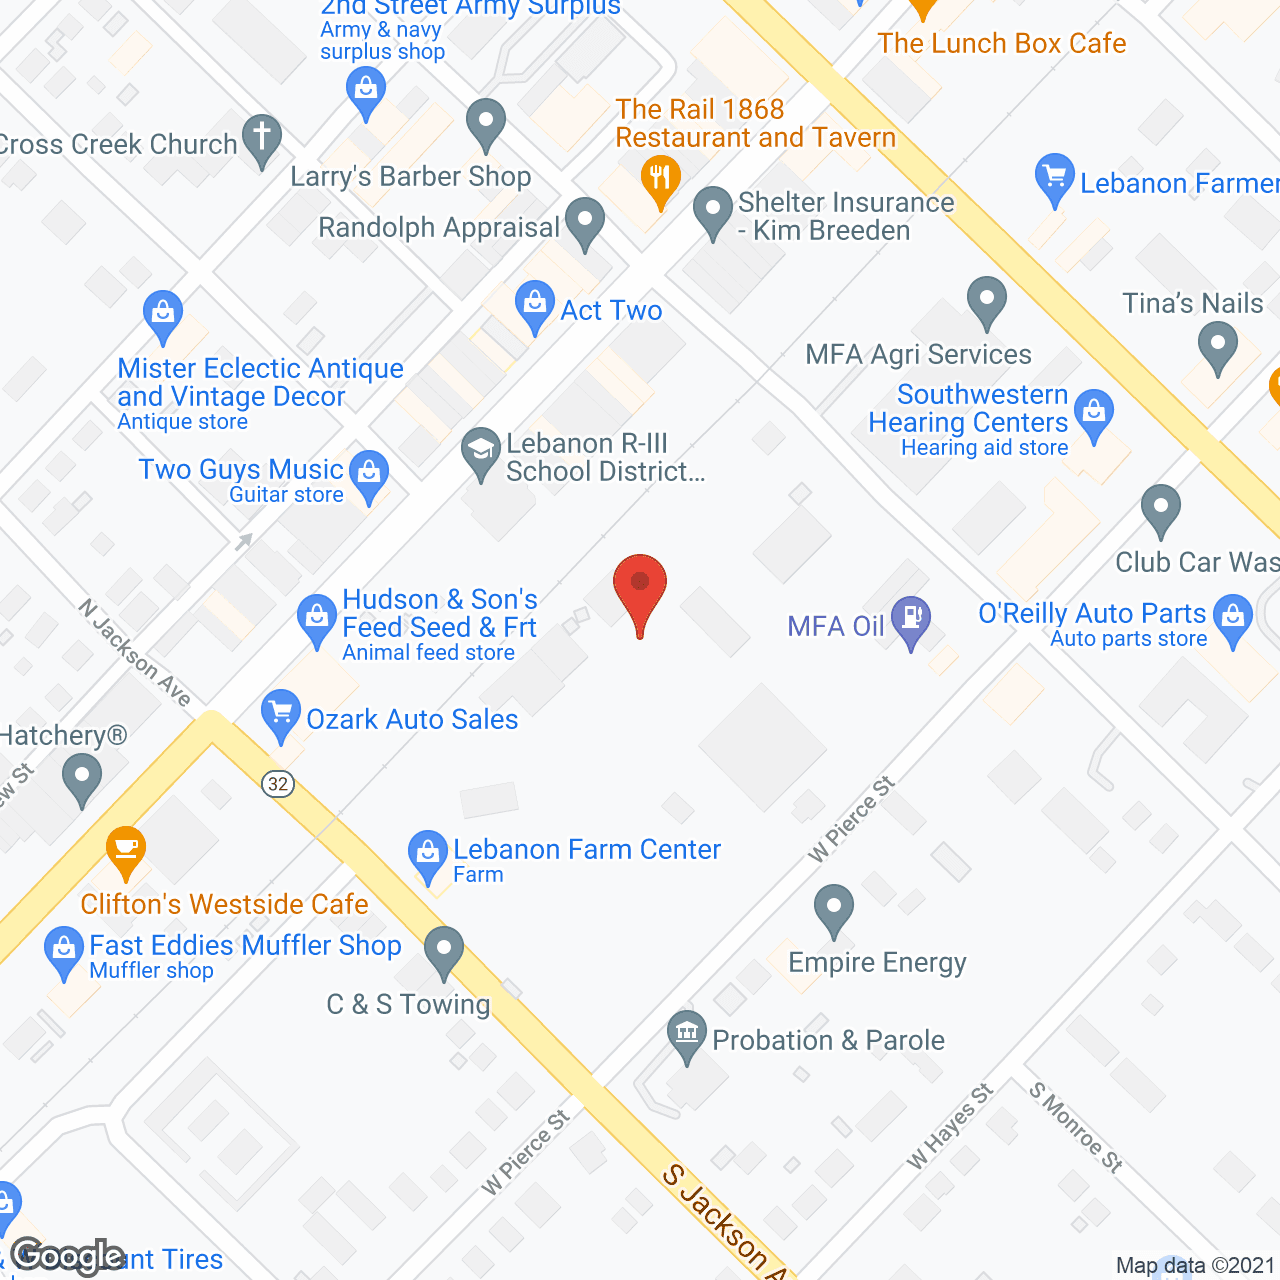 Cedarhurst of Lebanon in google map